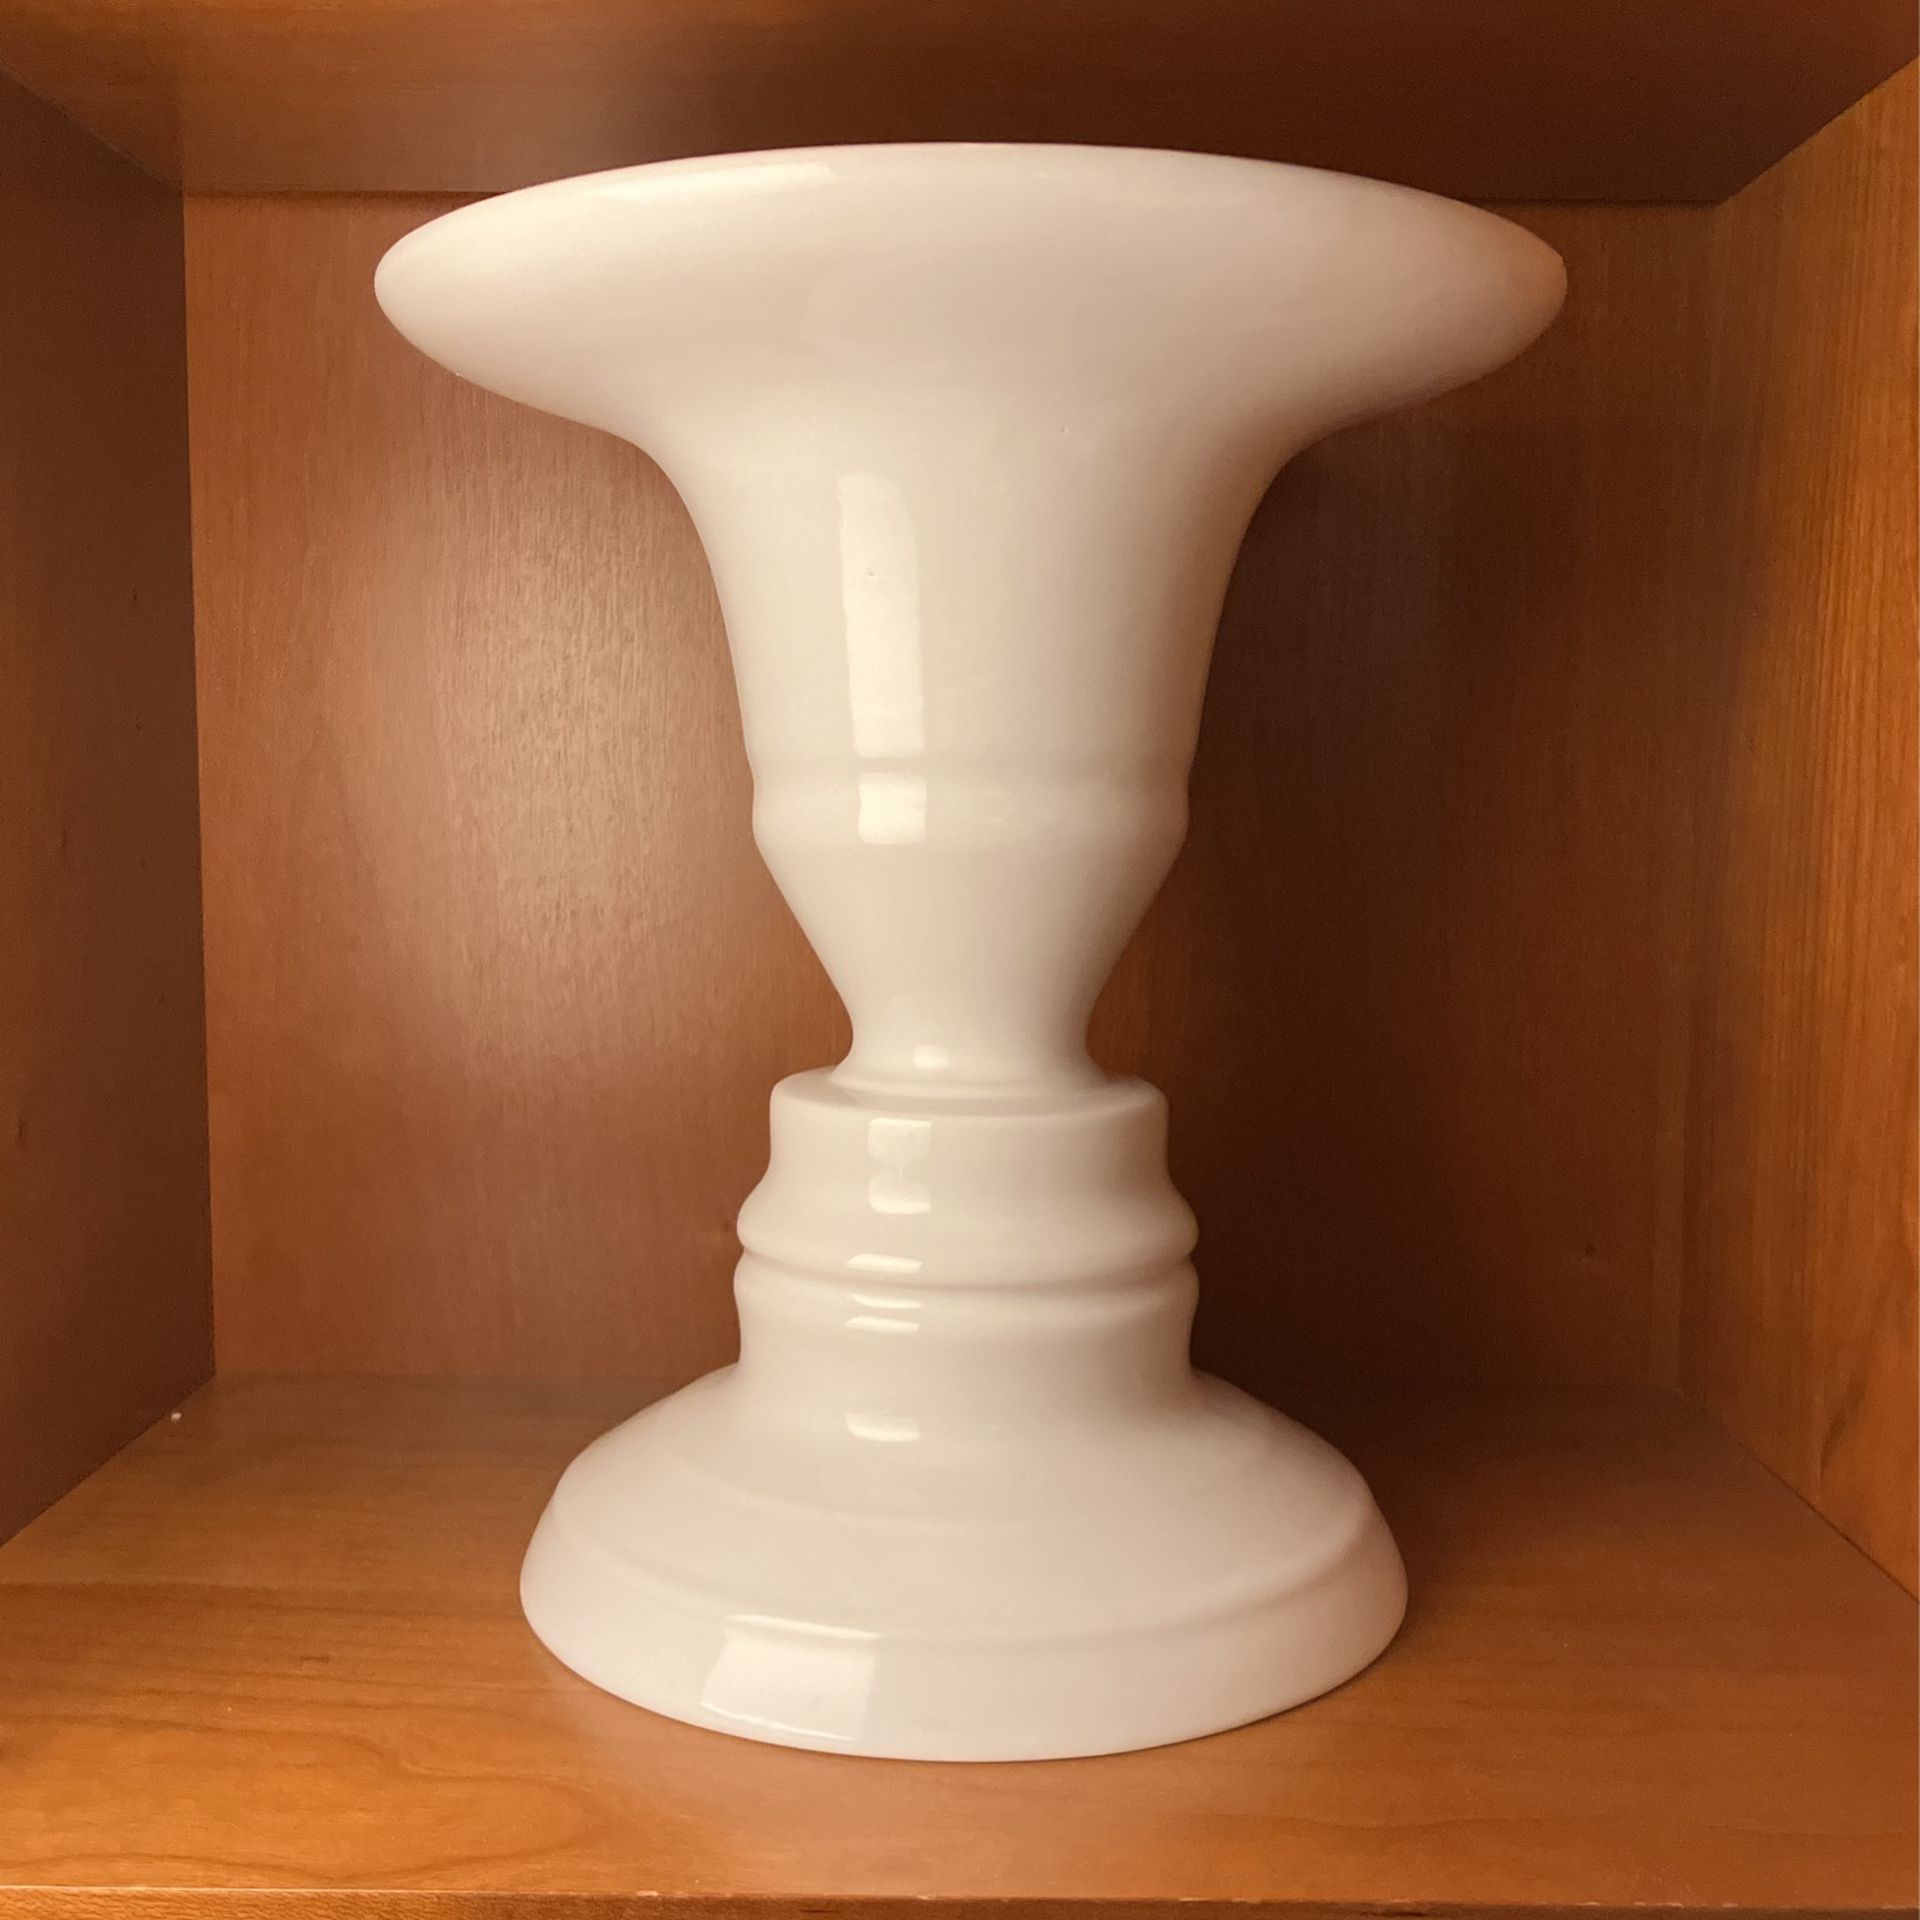 Optical Illusion Vase